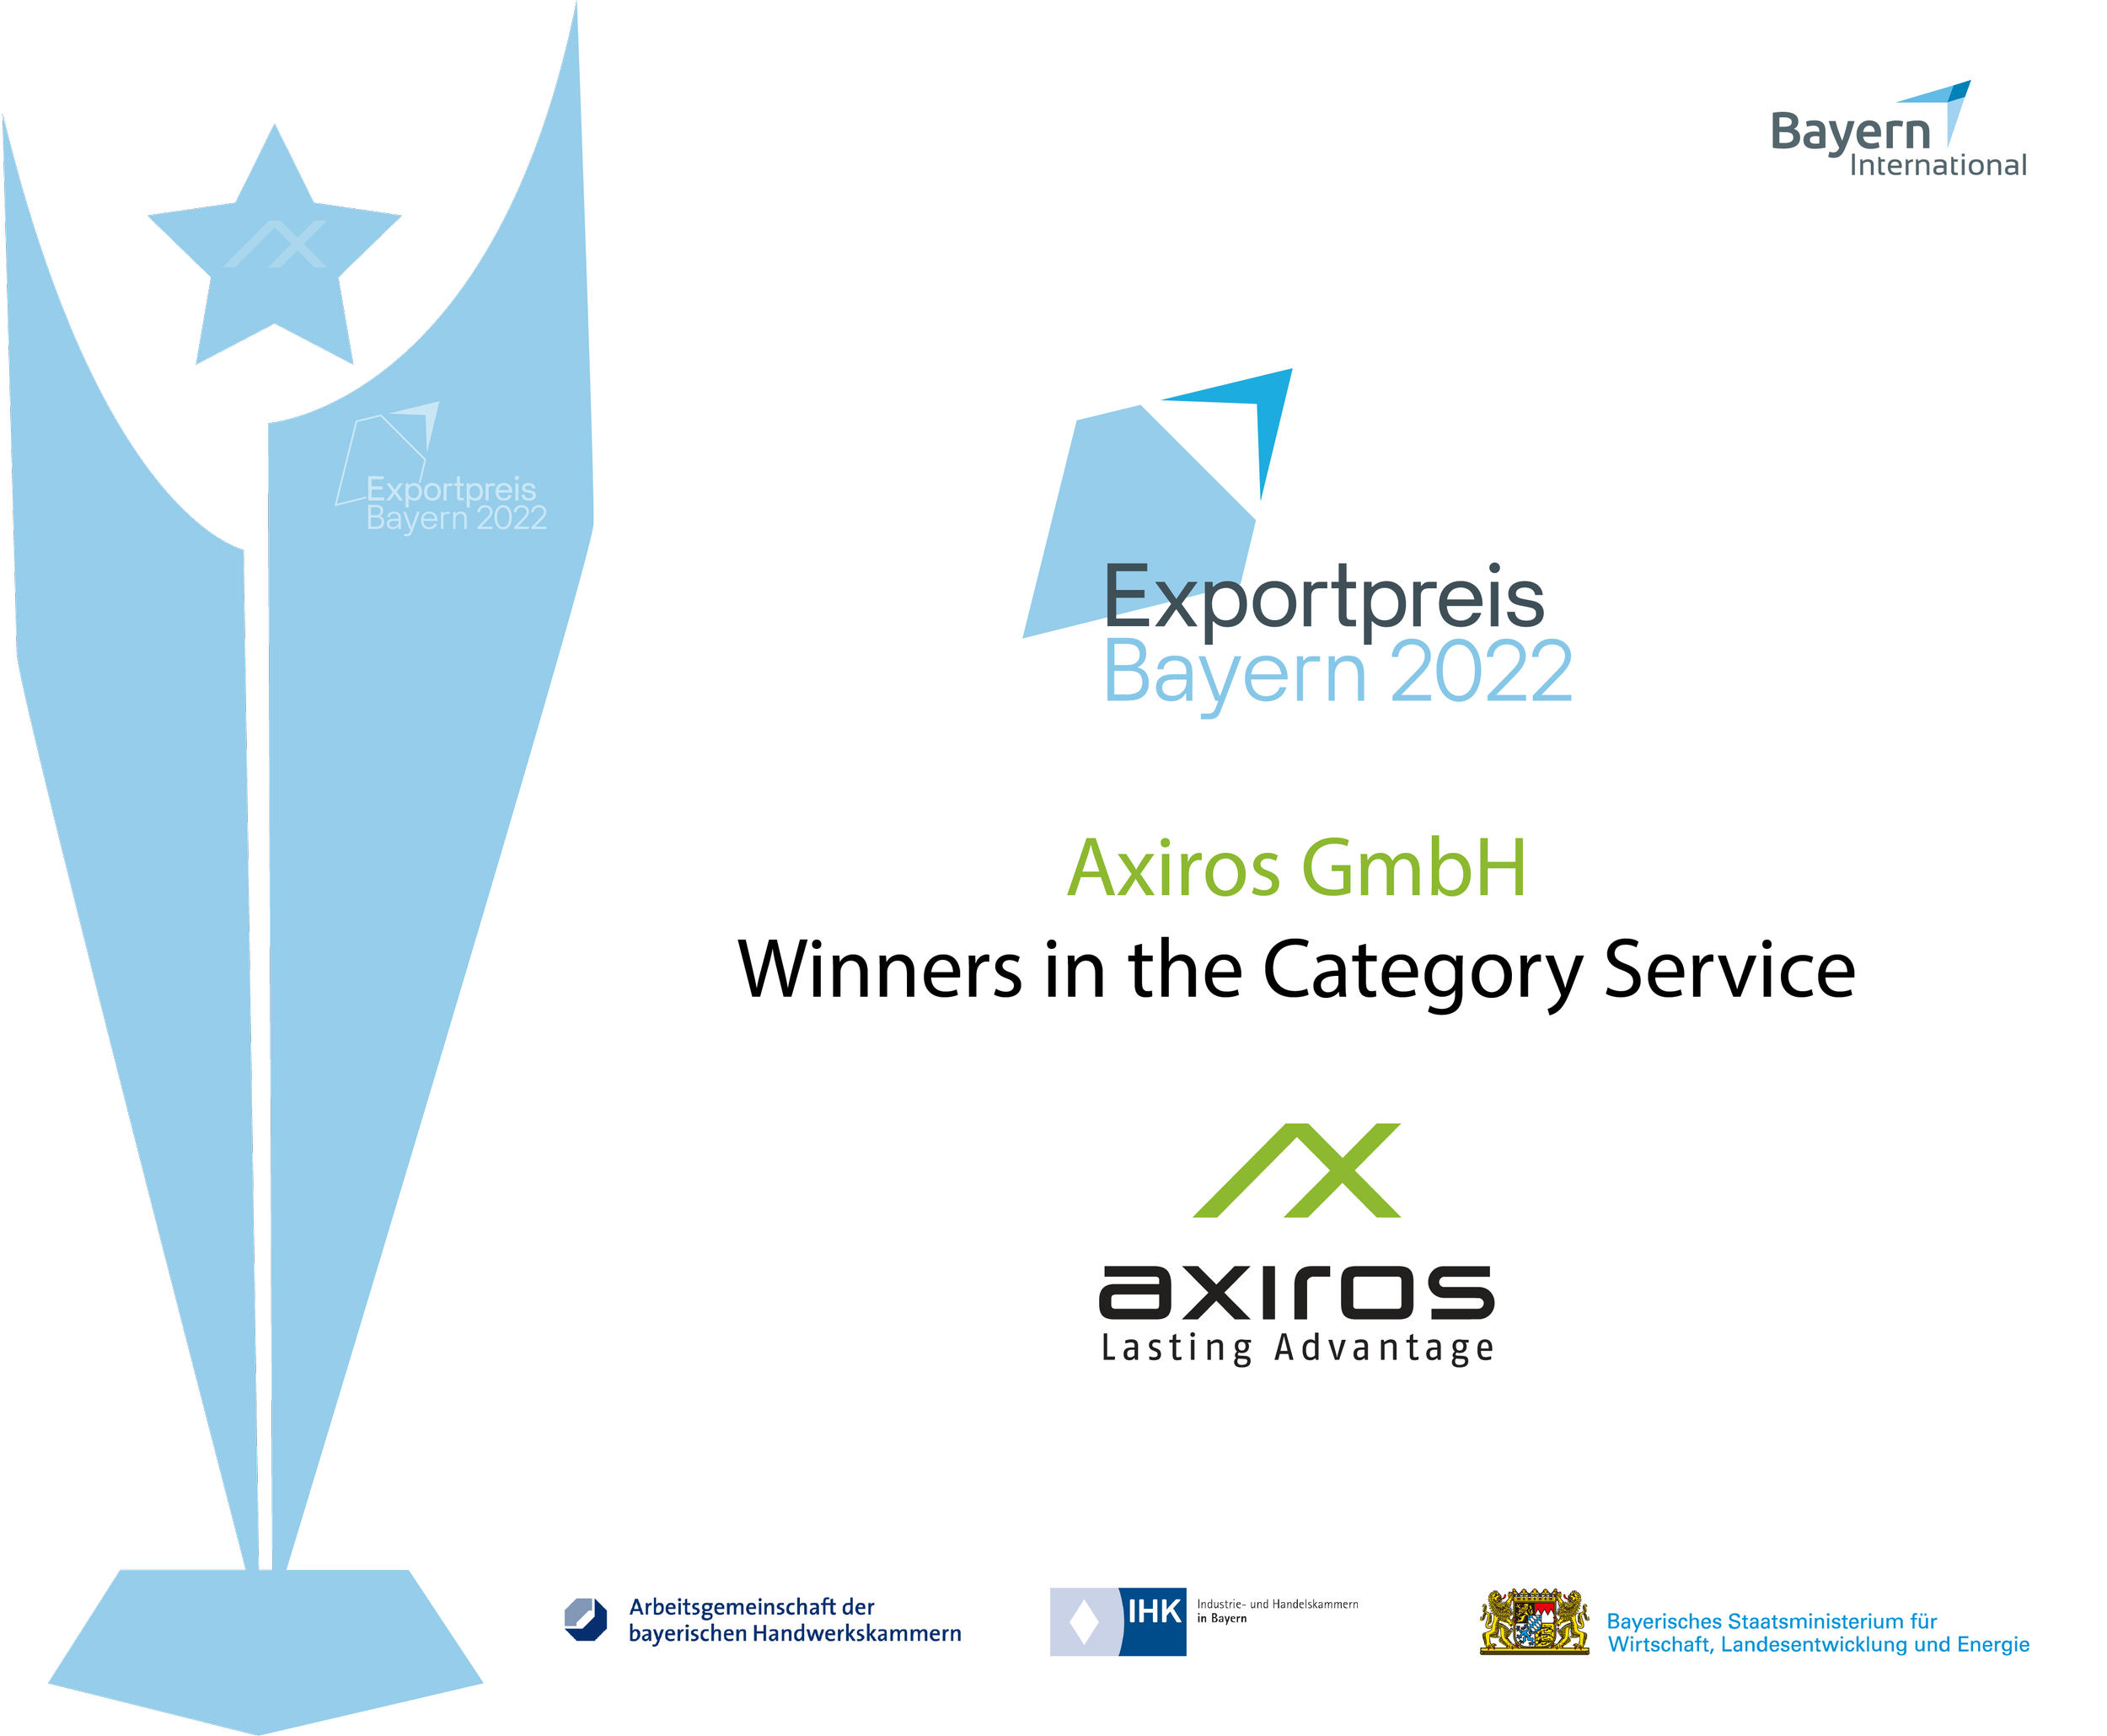 Axiros winner in the category service Exportpreis Bayern 2022